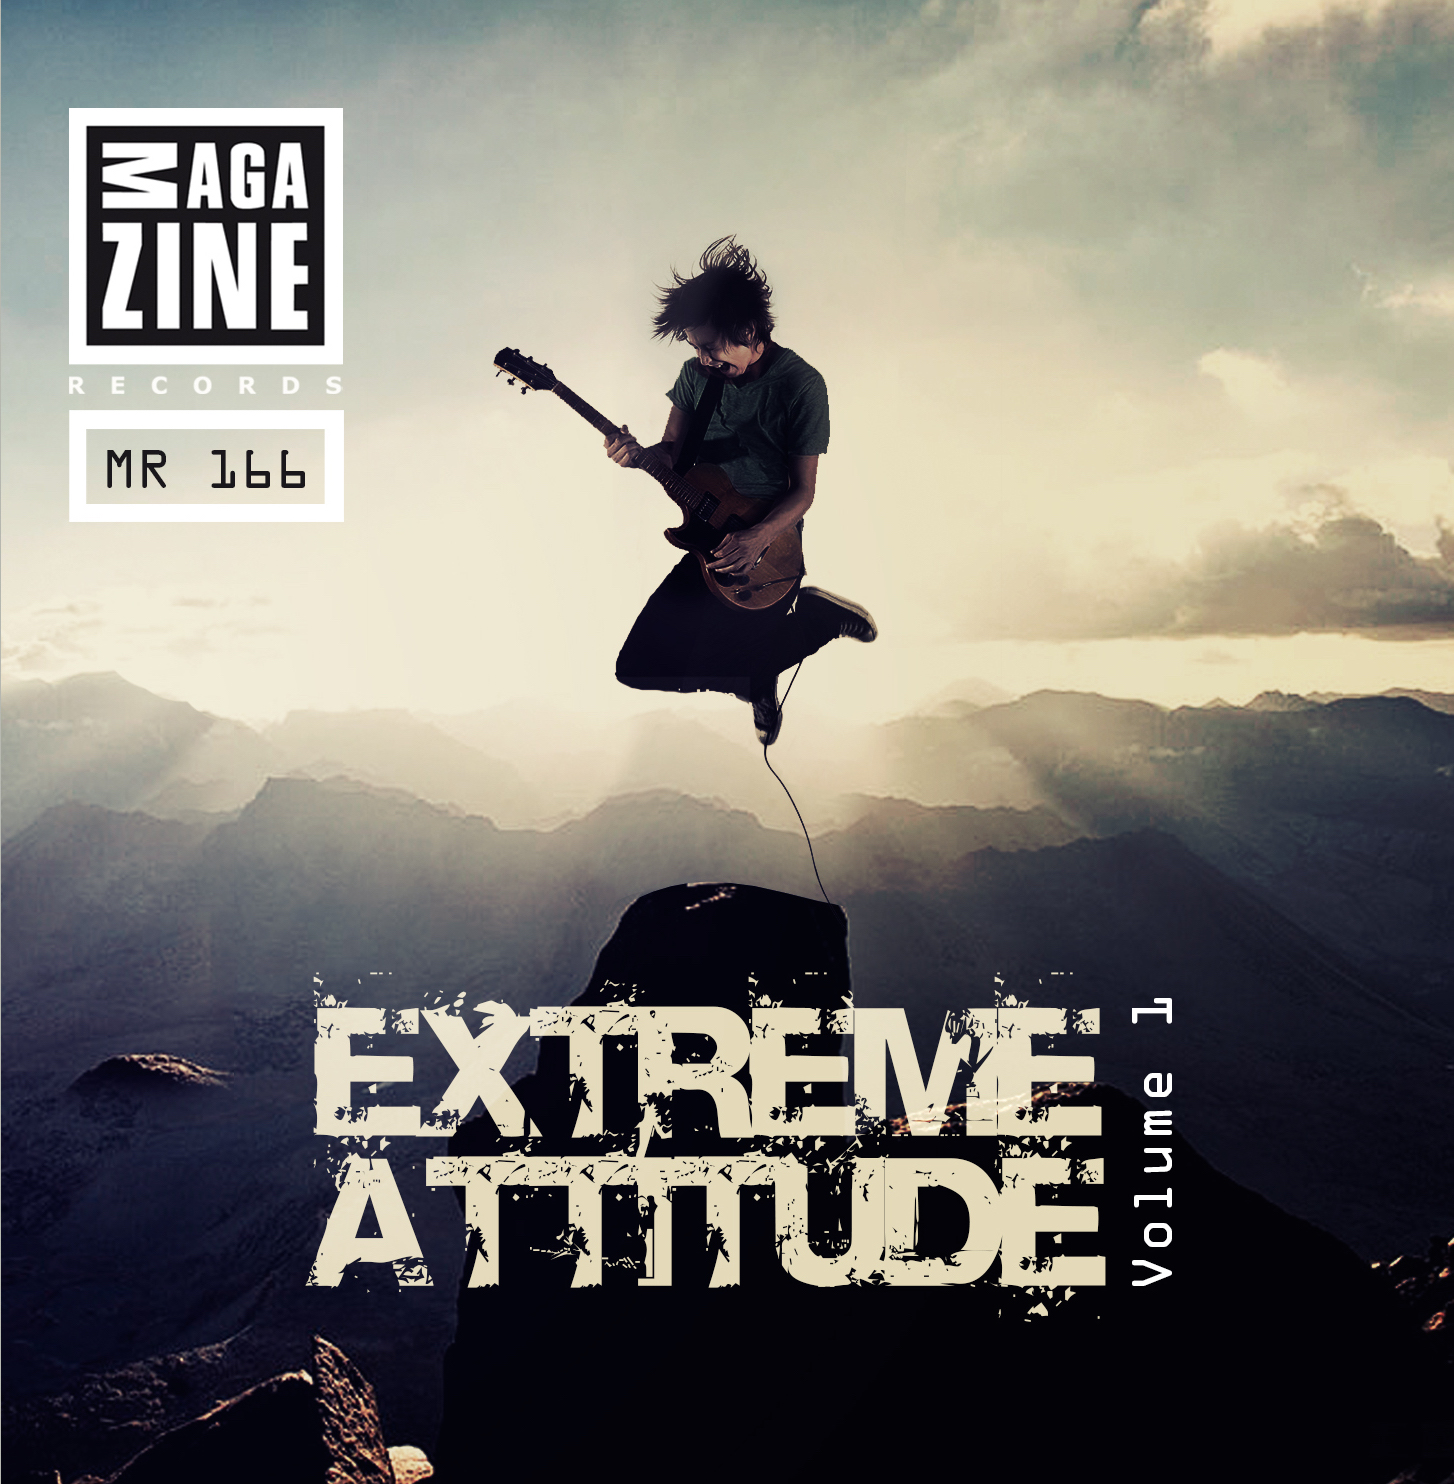 CHRIS RIME - Extreme attitude cover 